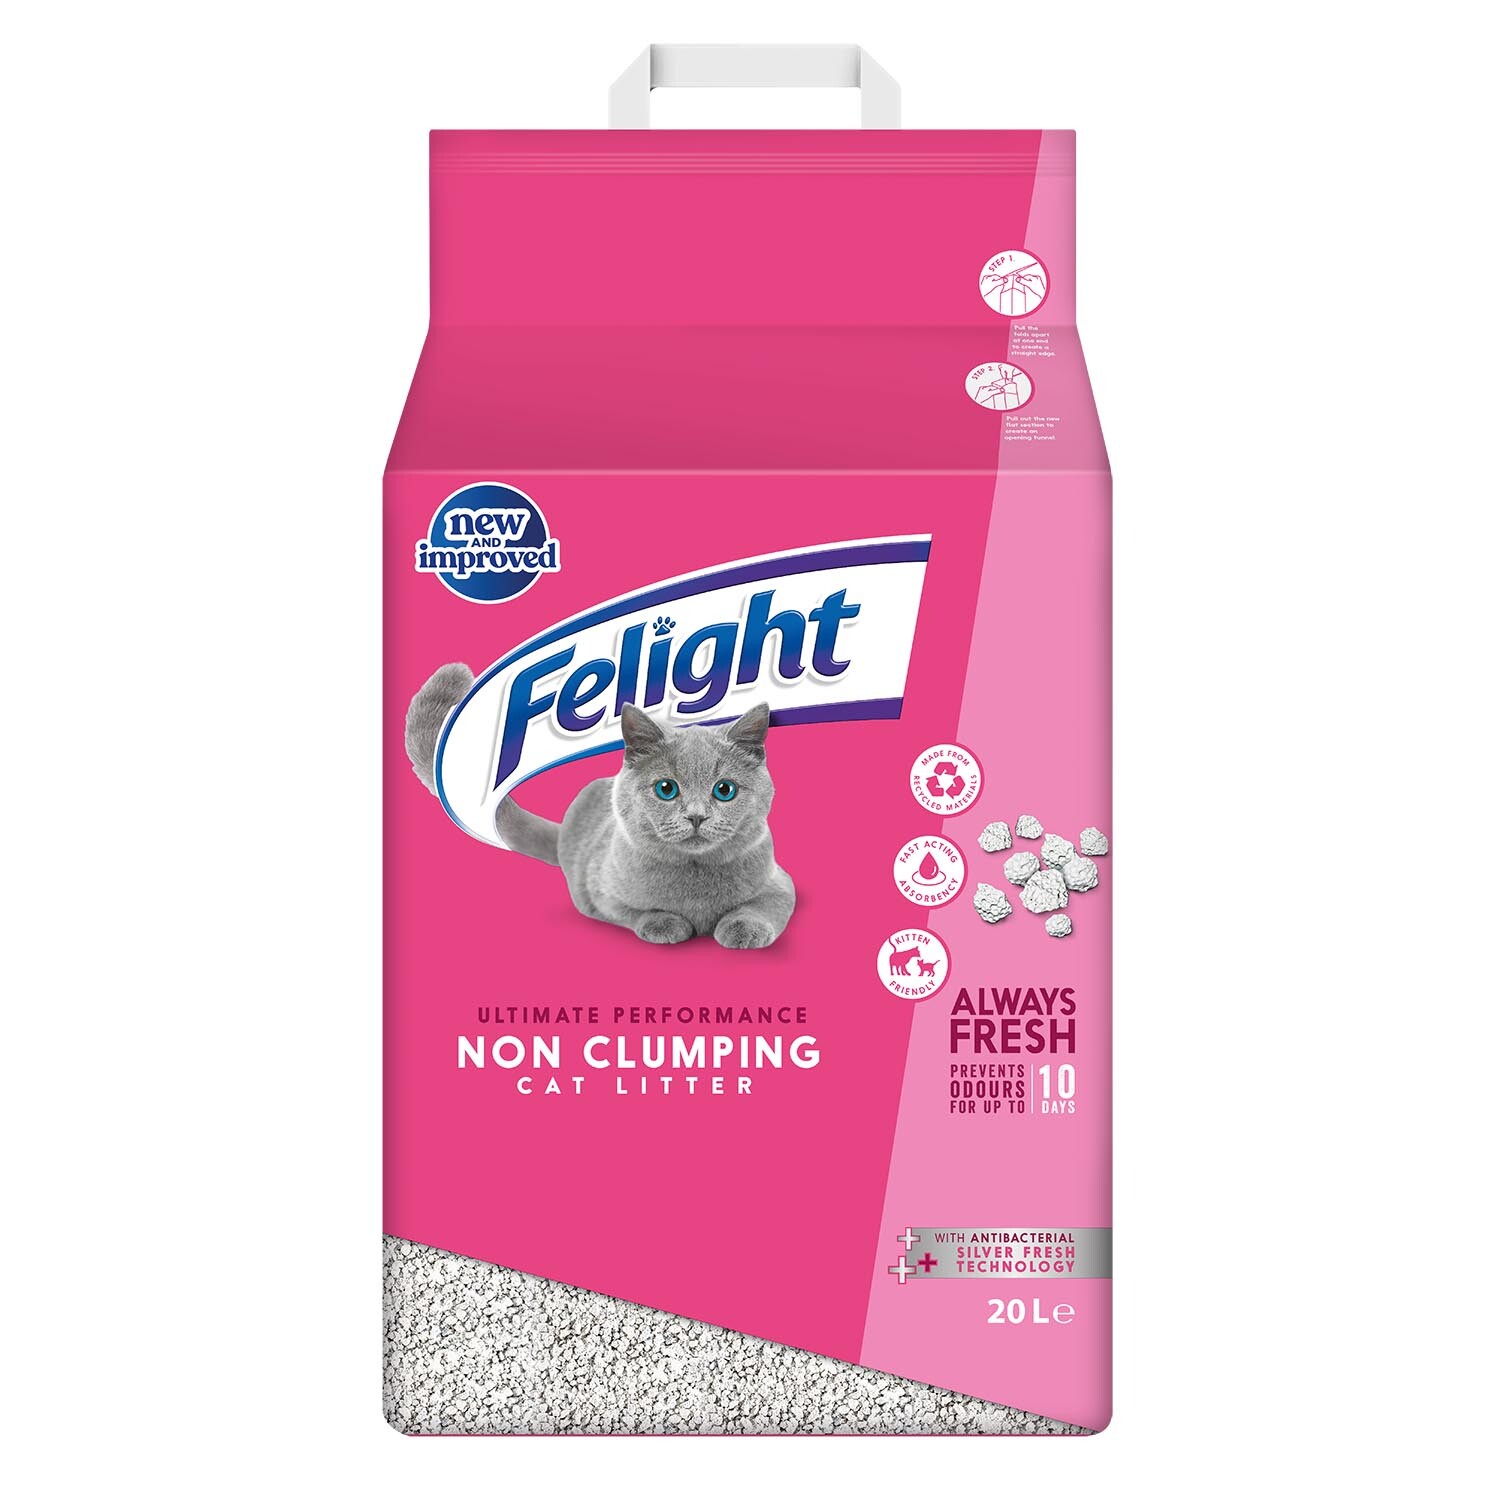 Felight Antibacterial Non Clumping Cat Litter 20L Image 1